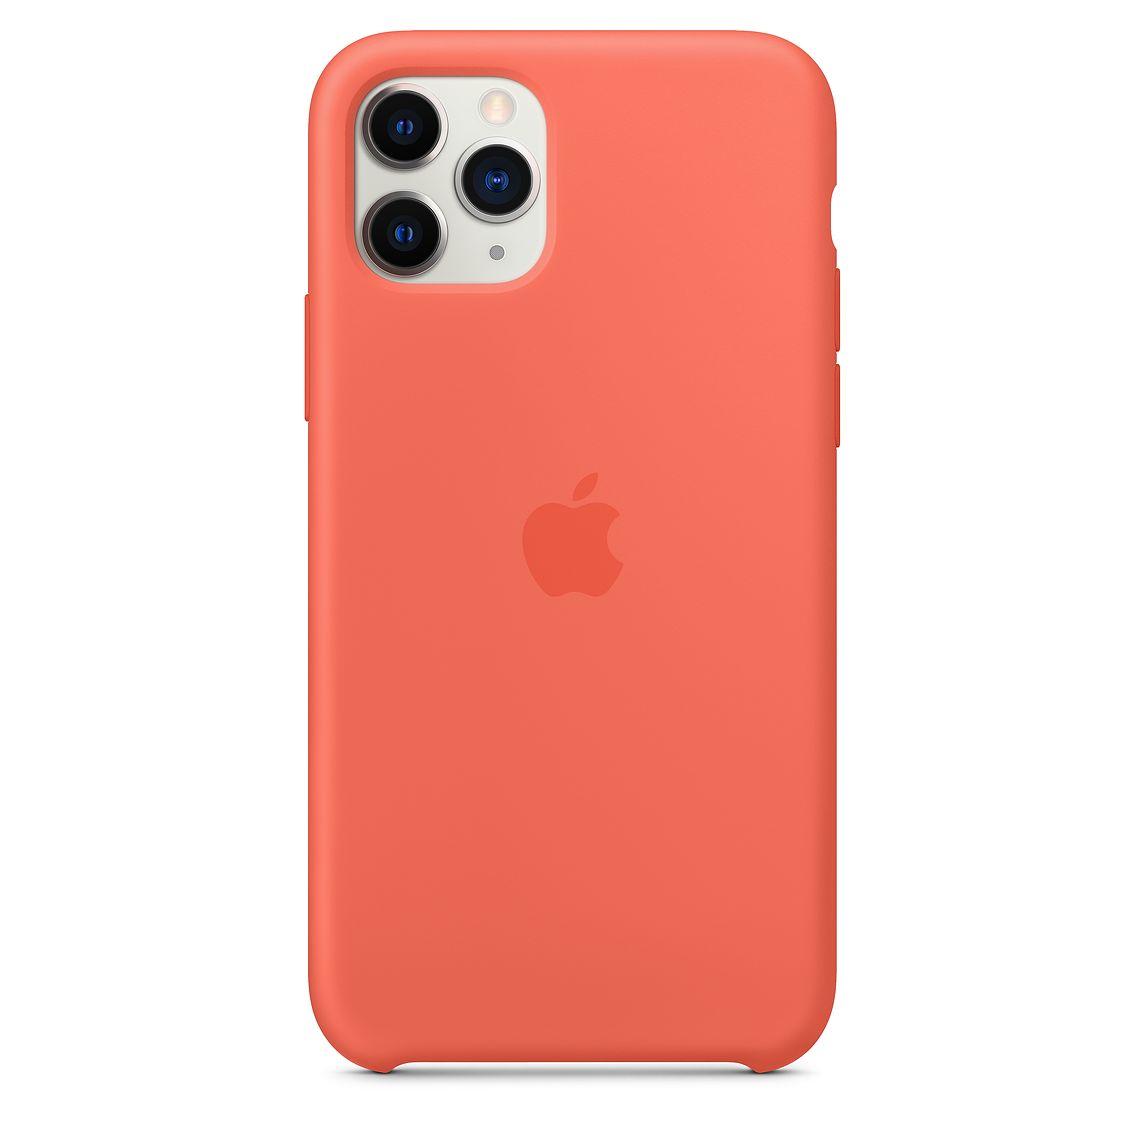 Оригинальный чехол Apple для IPhone 11 Pro Silicone Case - Clementine (Orange)